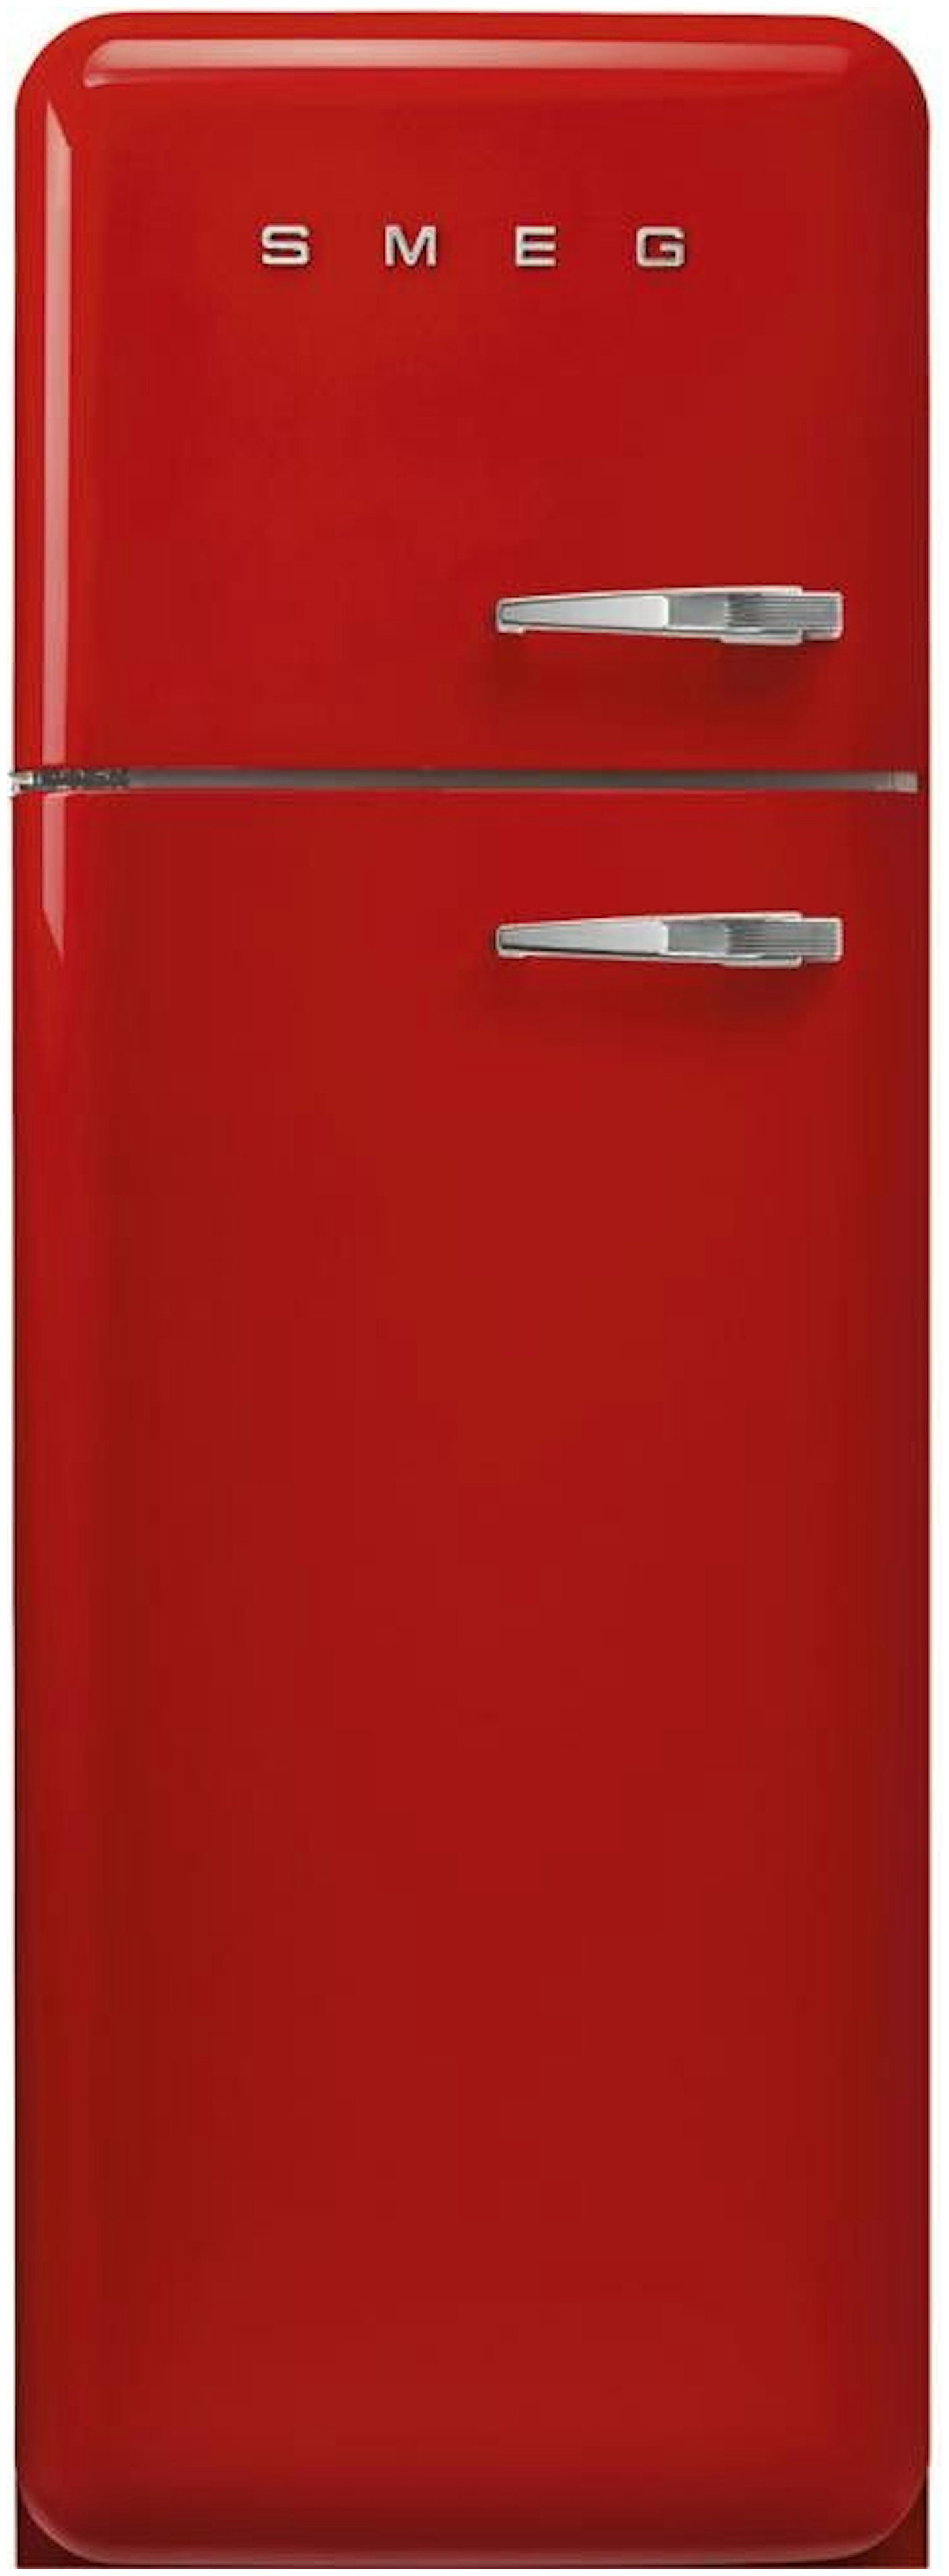 Sociologie Honderd jaar Langwerpig Rode koelkast kopen? - Alle koelkasten in de kleur rood!